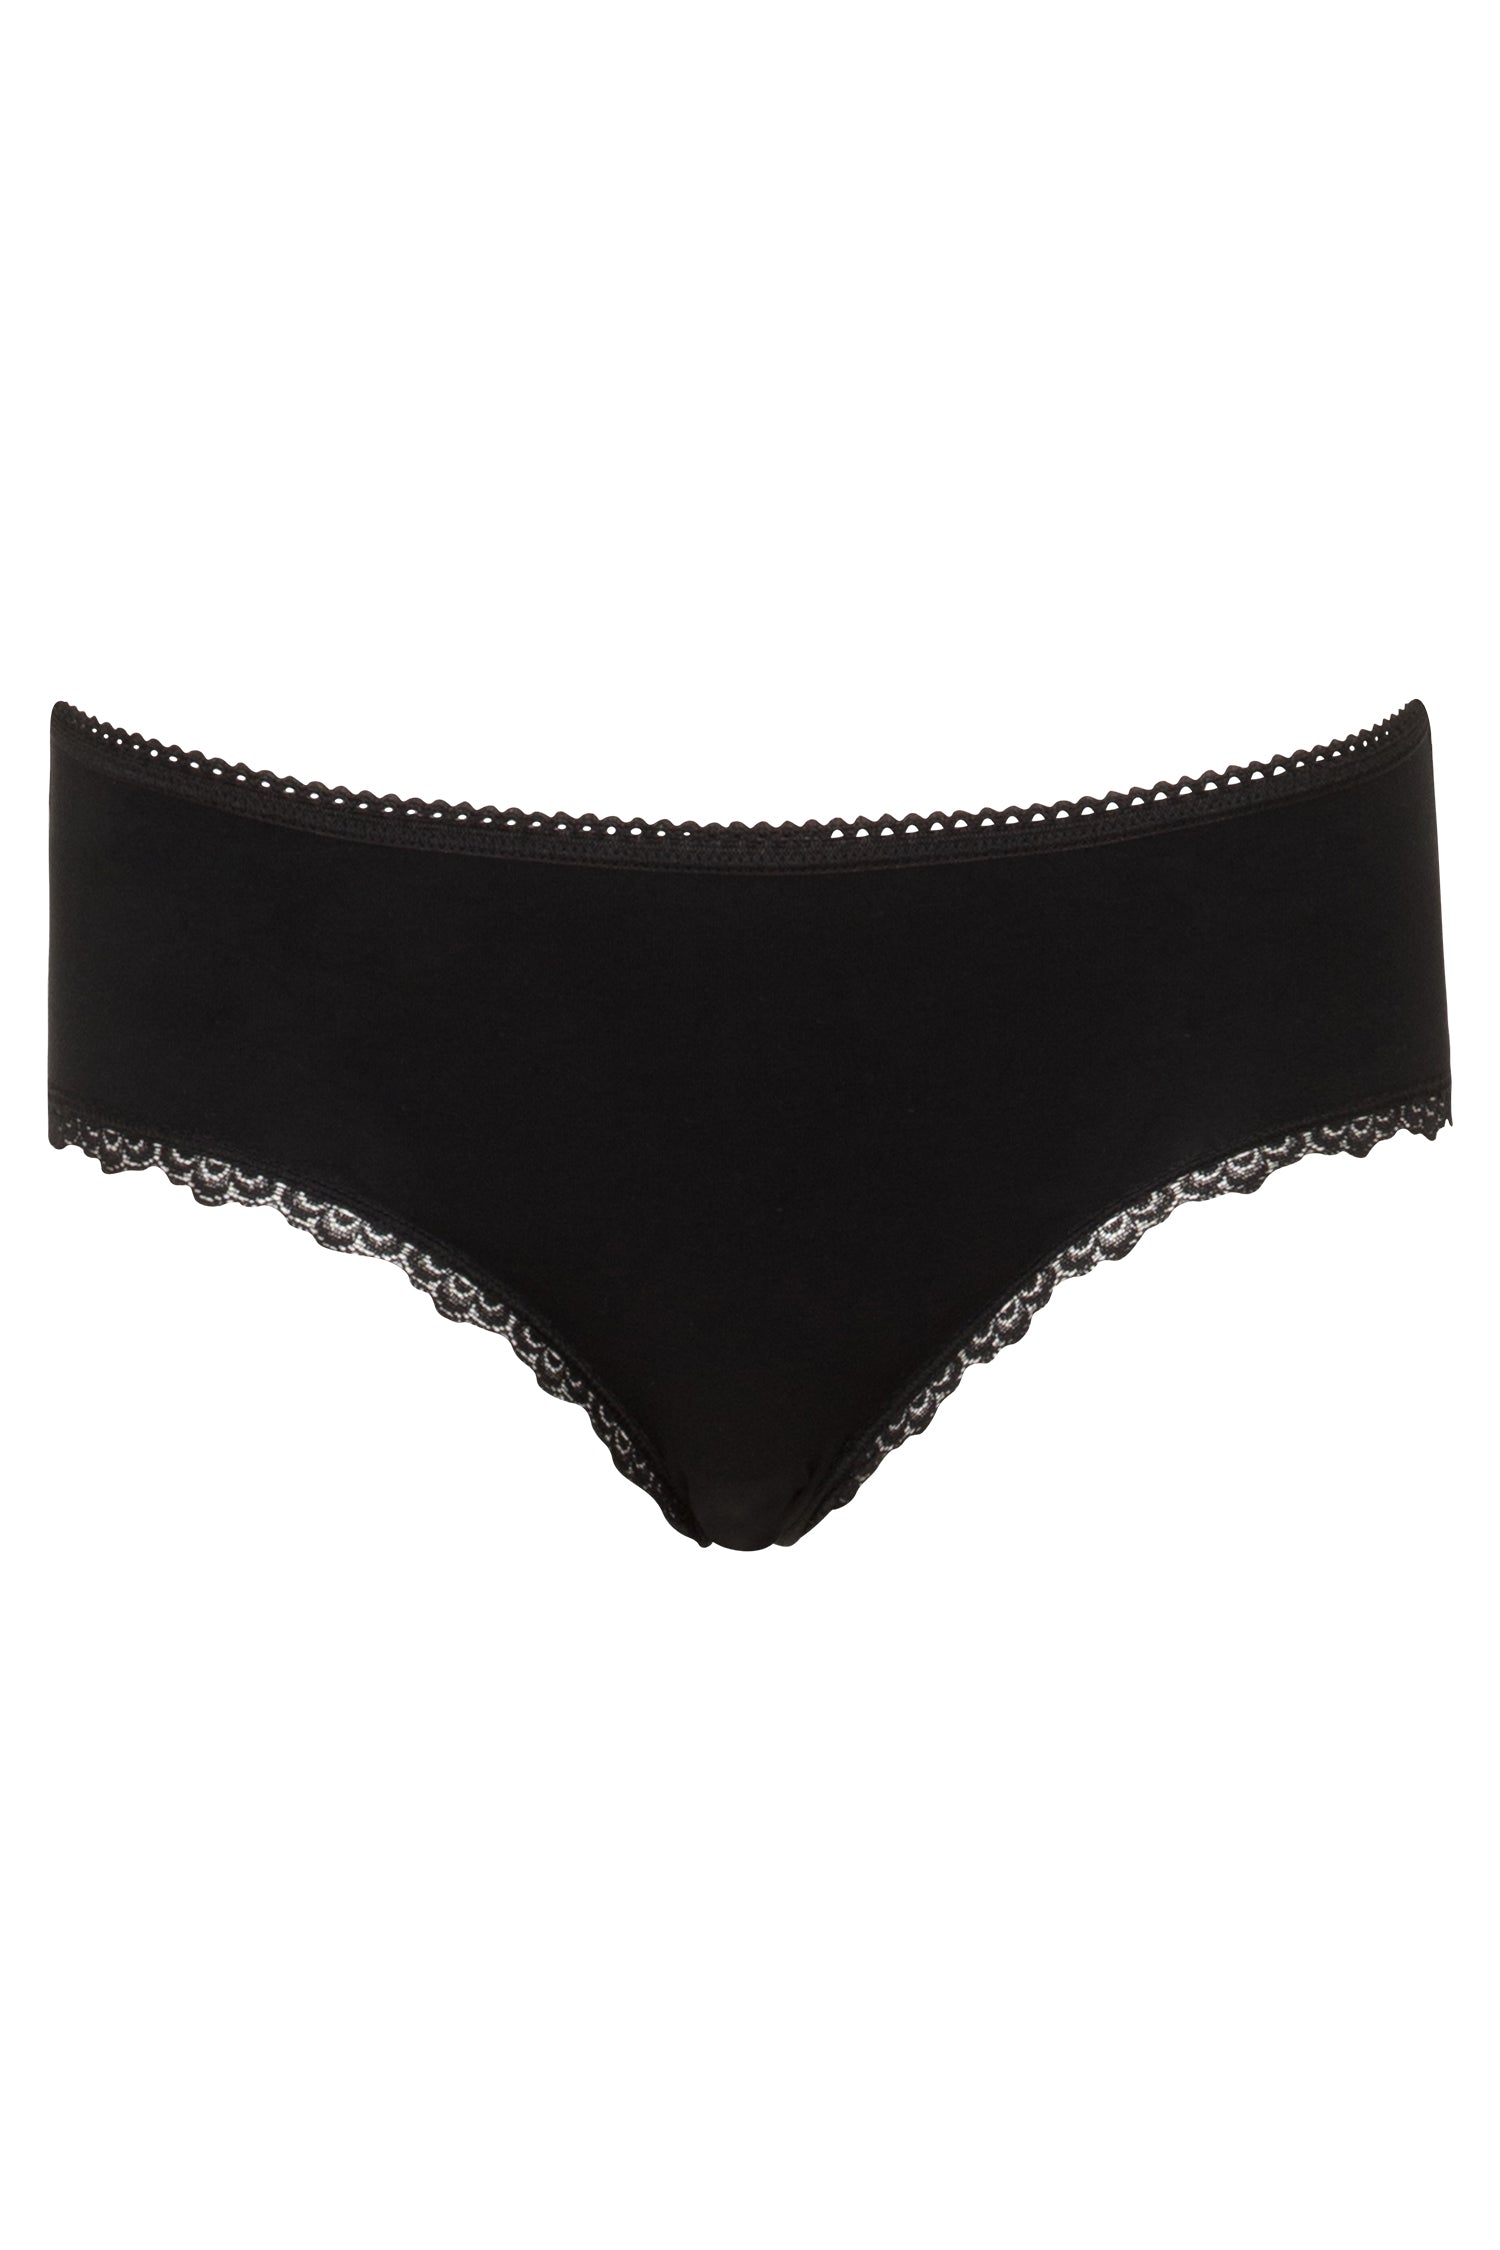 Undie-tectable® Lace Hi-Hipster Panty in Very Black – Krista K